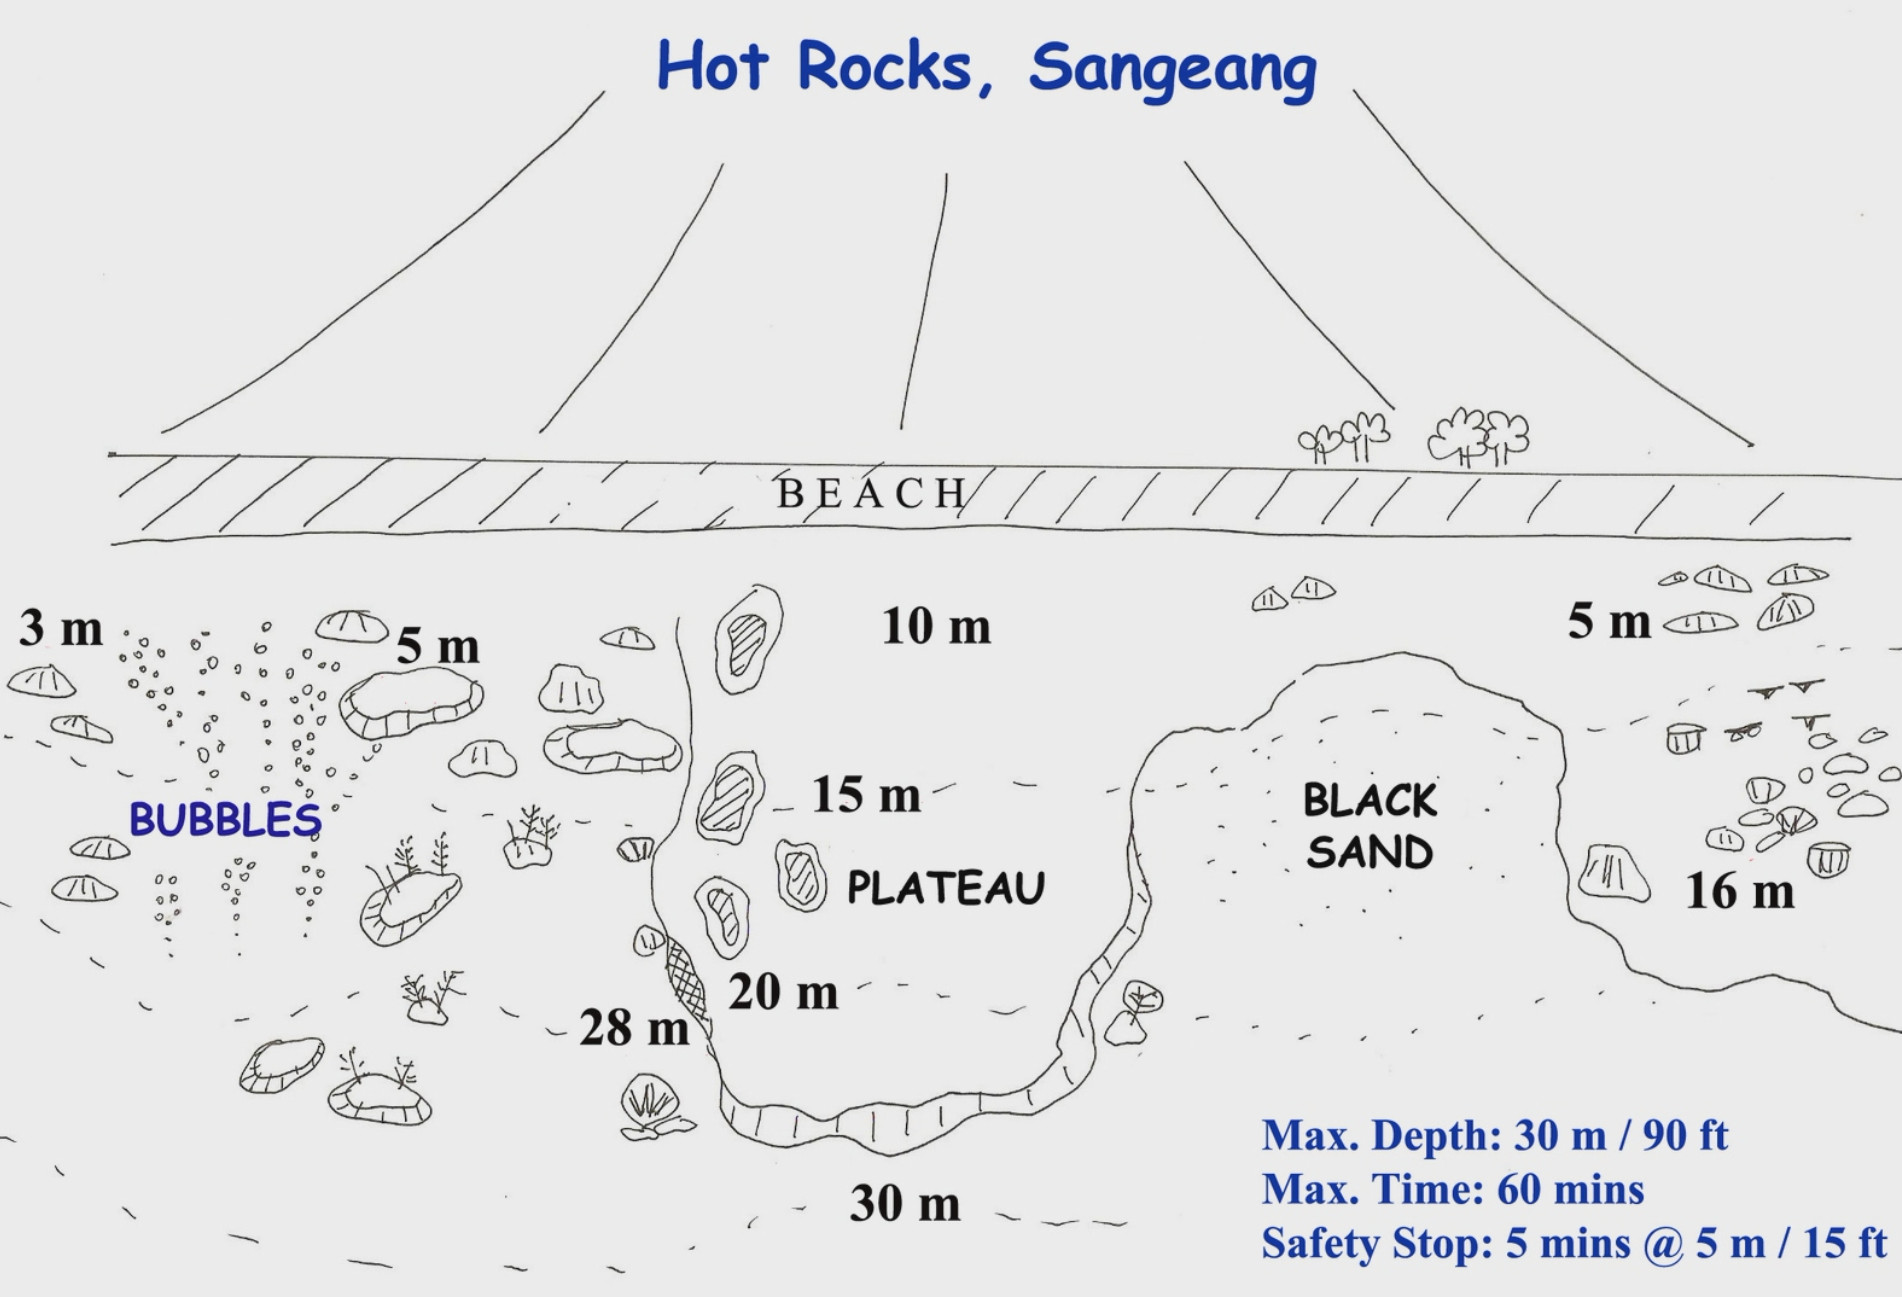 Hot Rocks sangeang